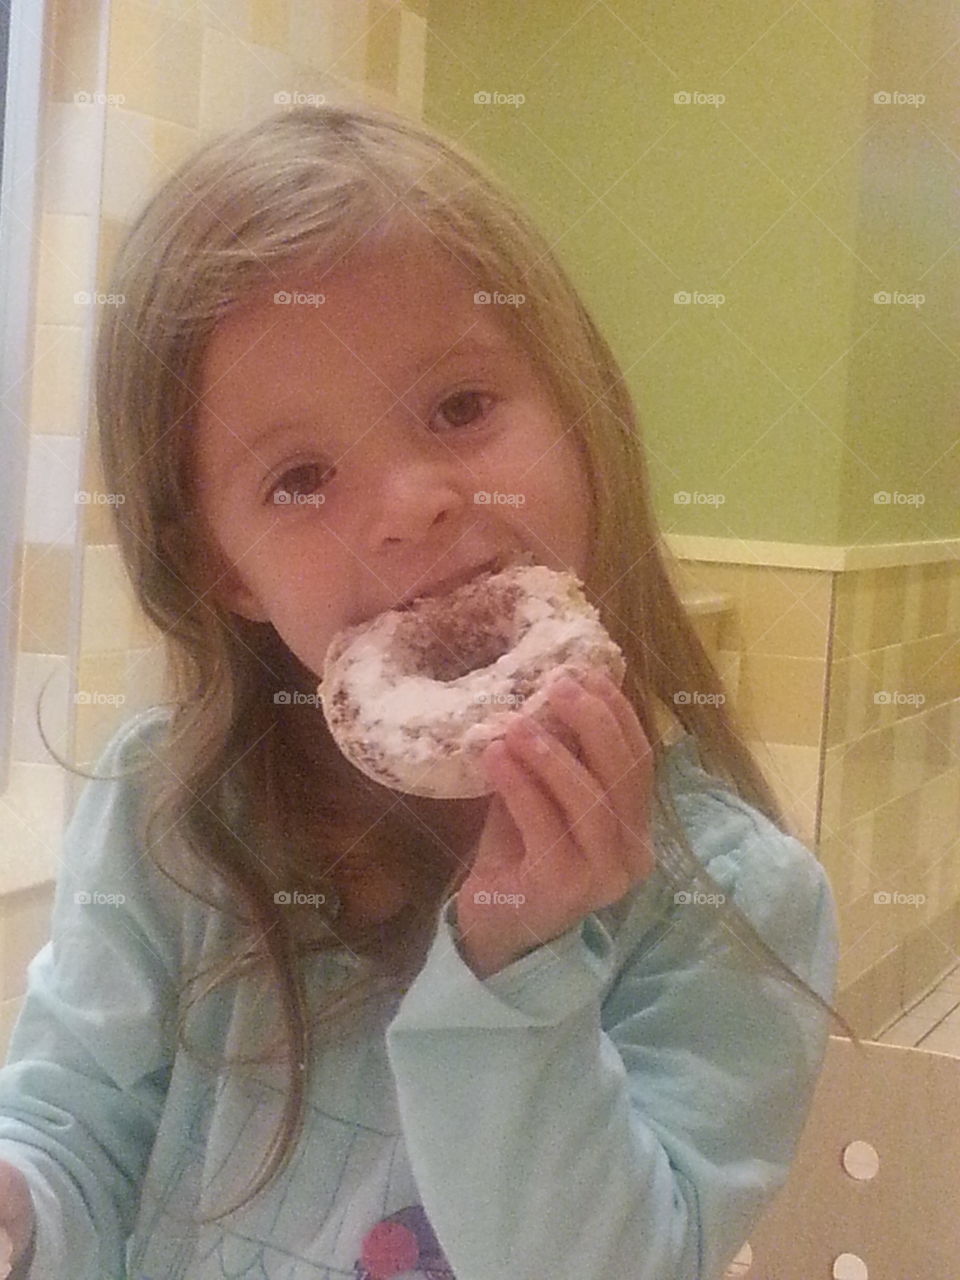 Best Donut Ever!. Krispy Kreme donuts in Pensacola Florida